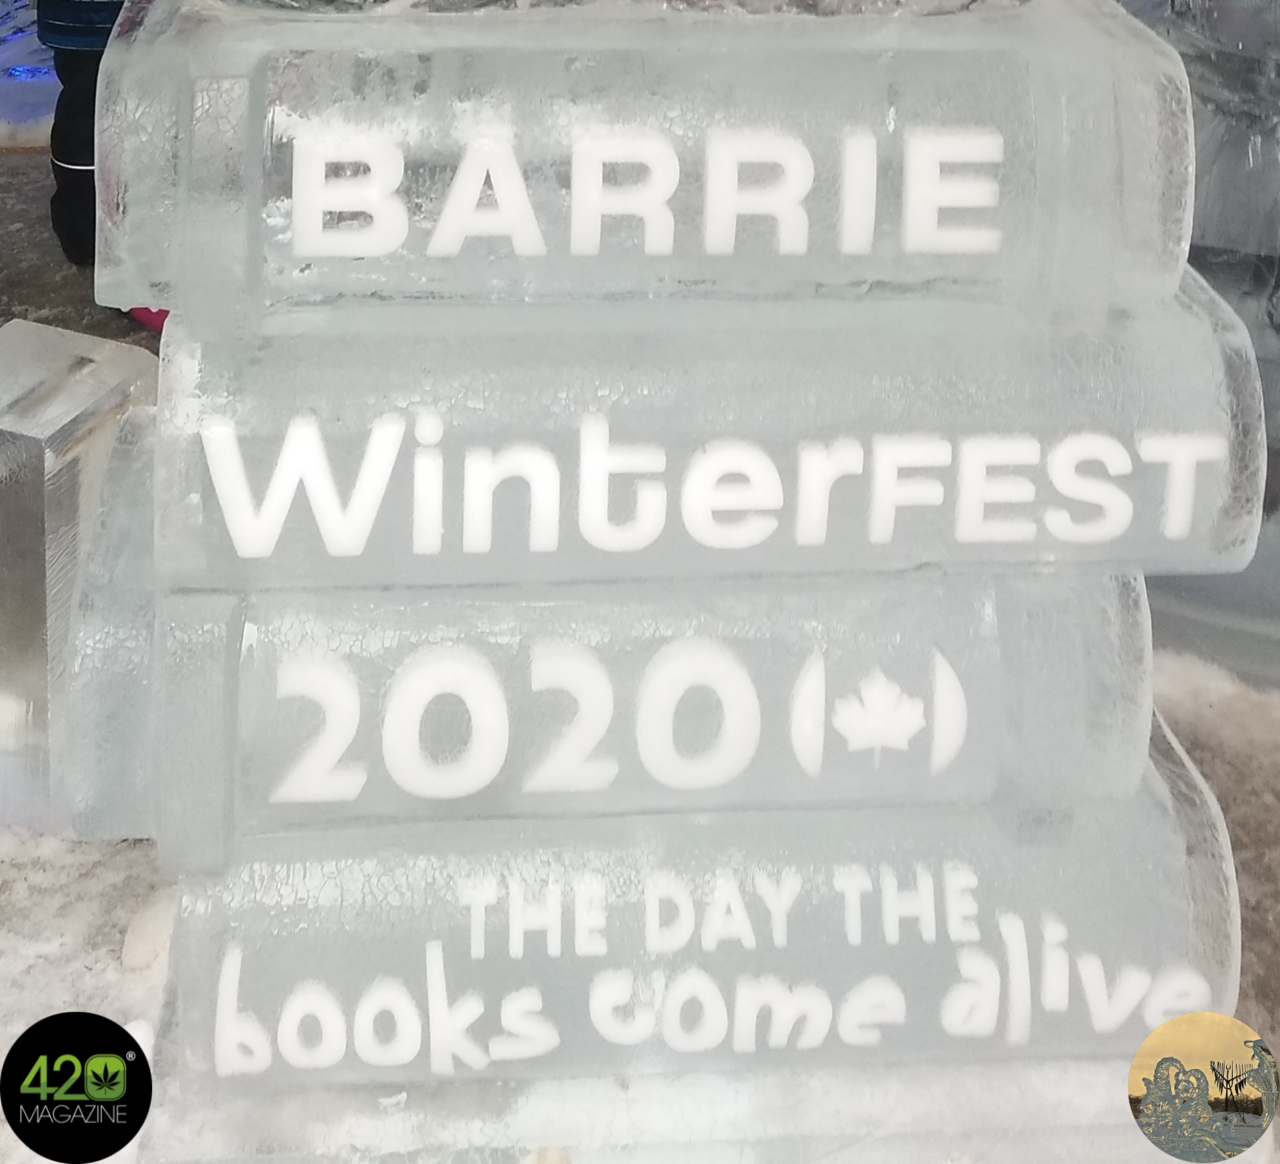 Barrie's Hello Winter 2020